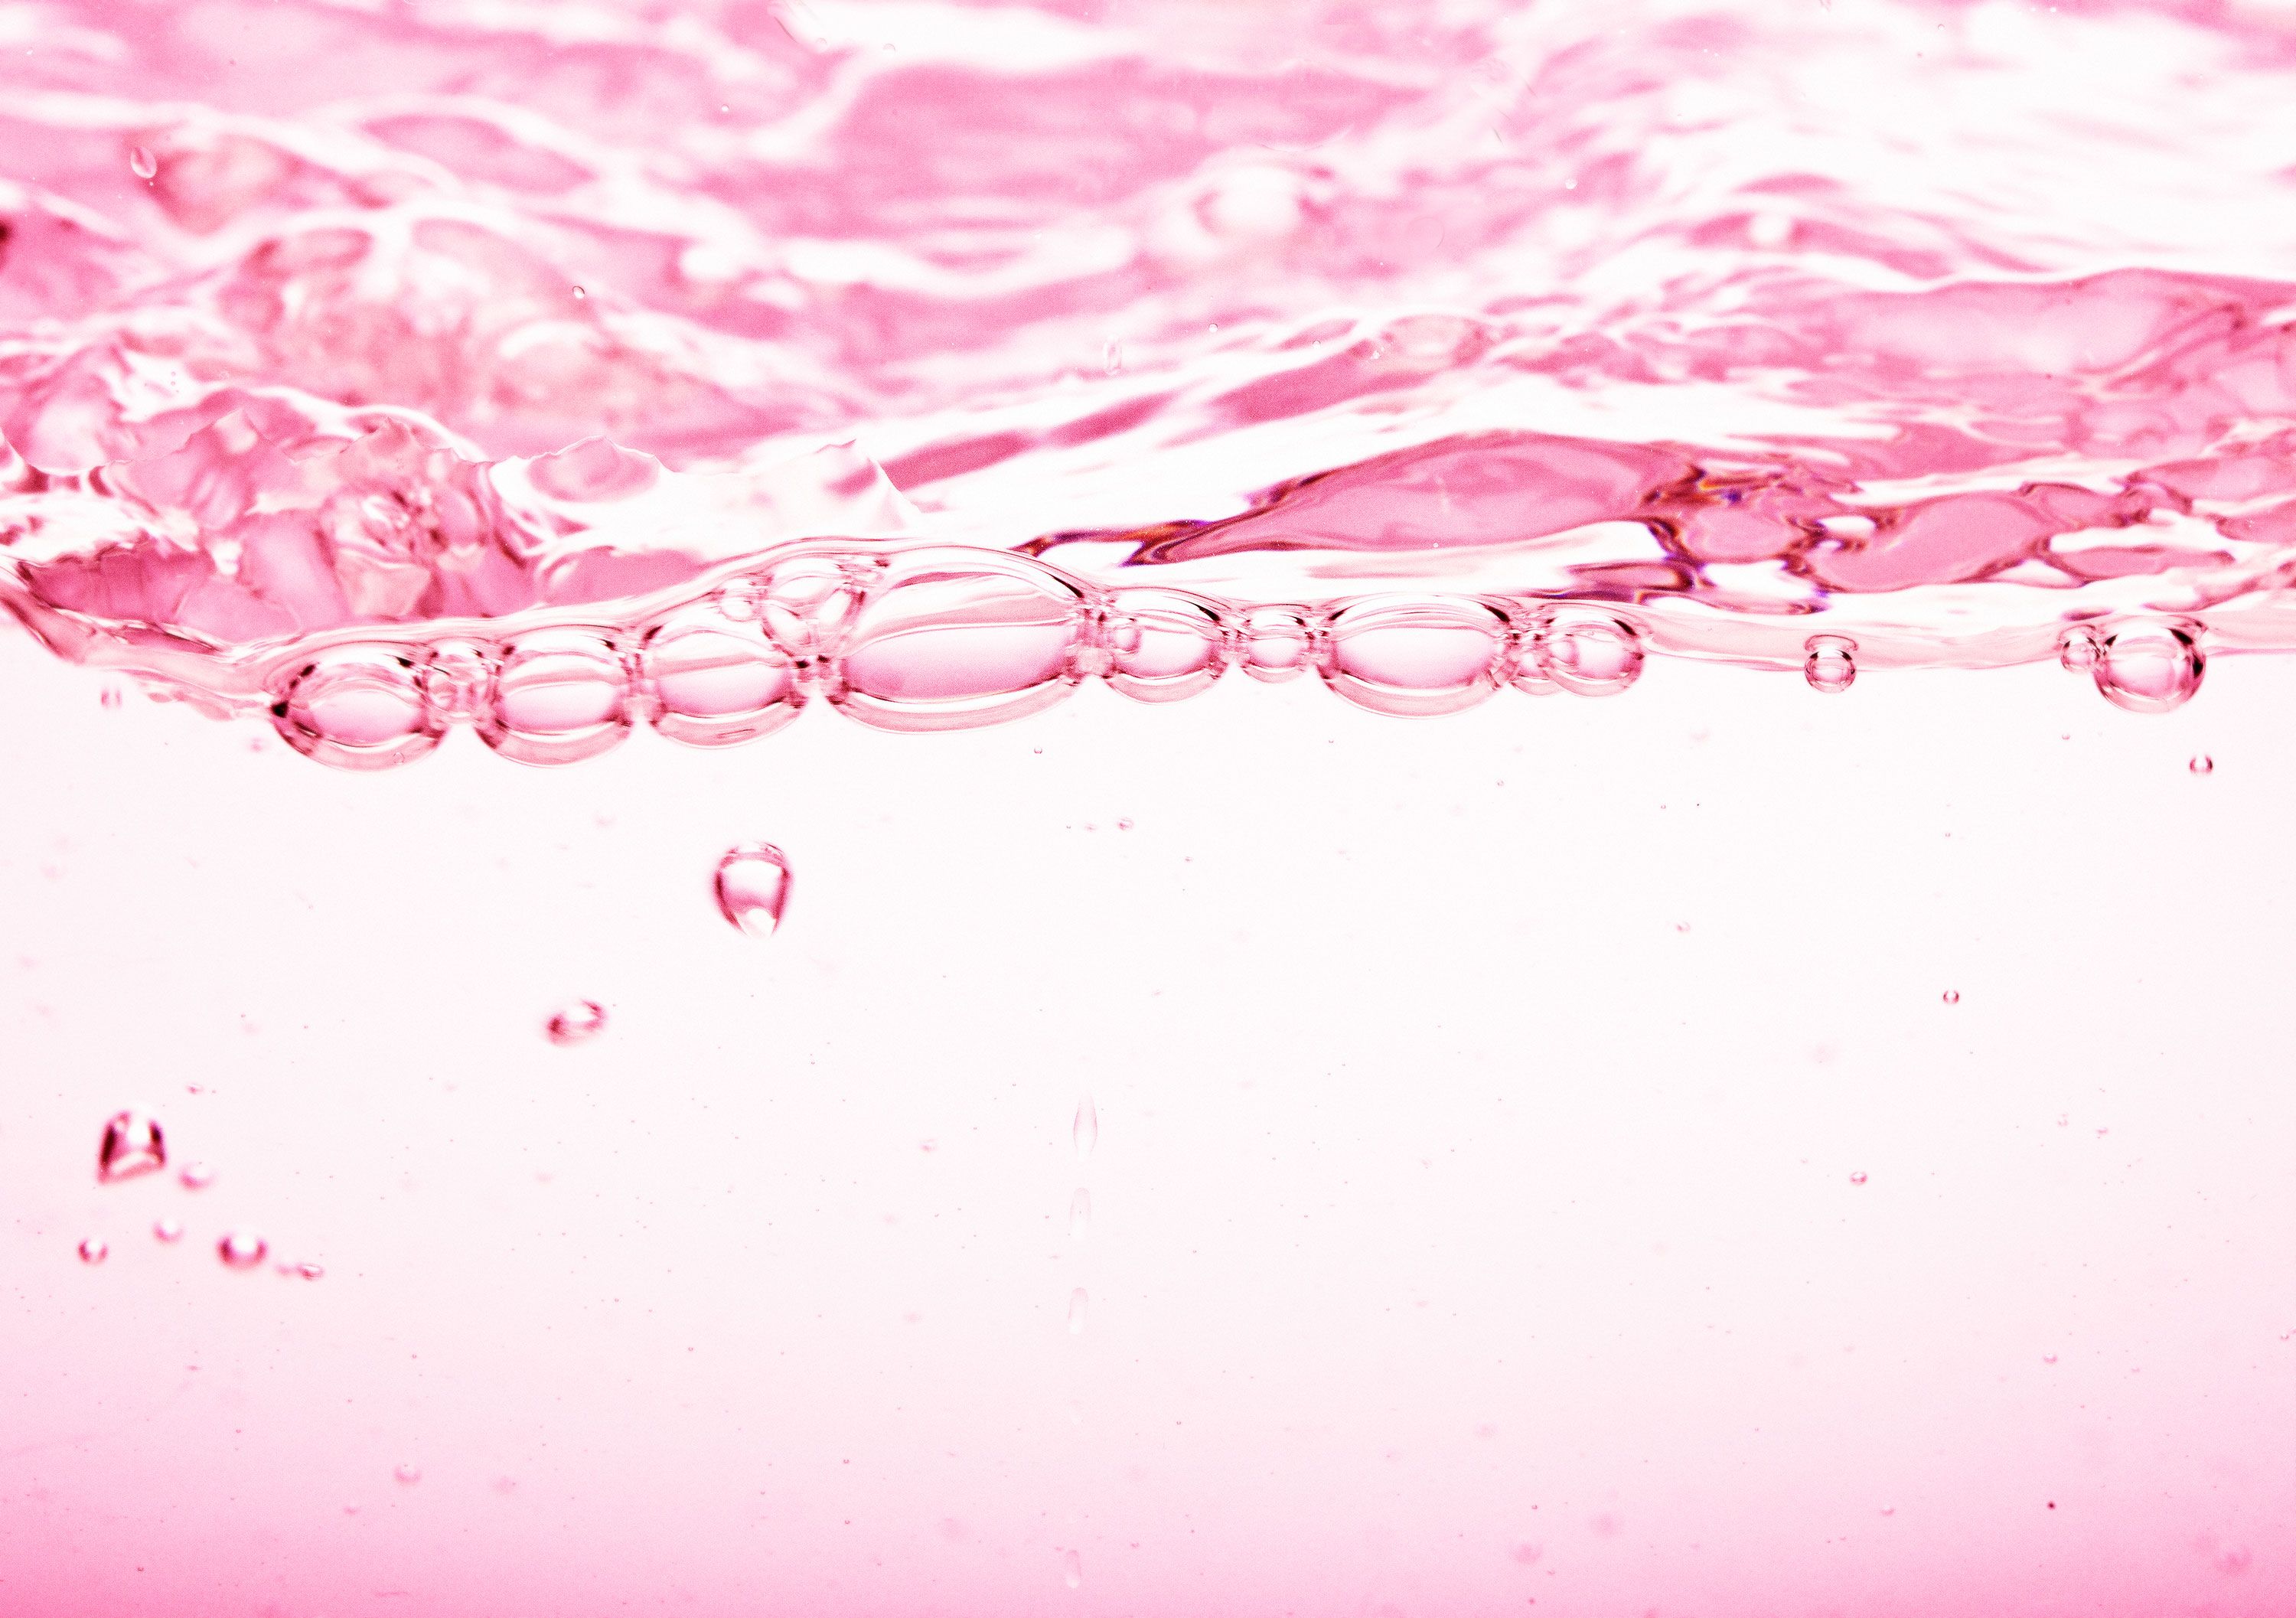 Potassium permanganate turns Canadian town's water pink, News